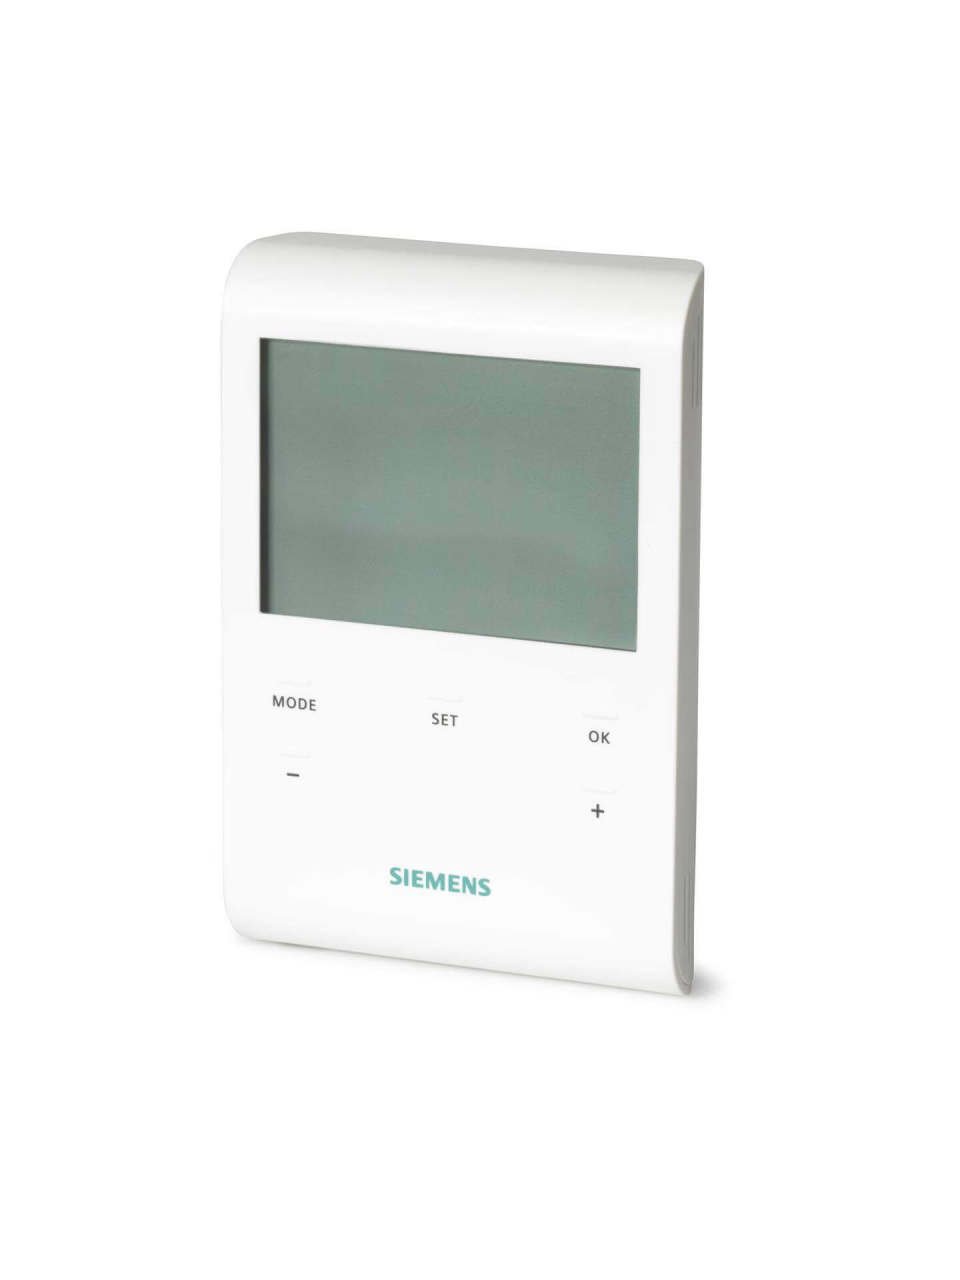 Siemens RDE100 Dijital Oda Termostatı